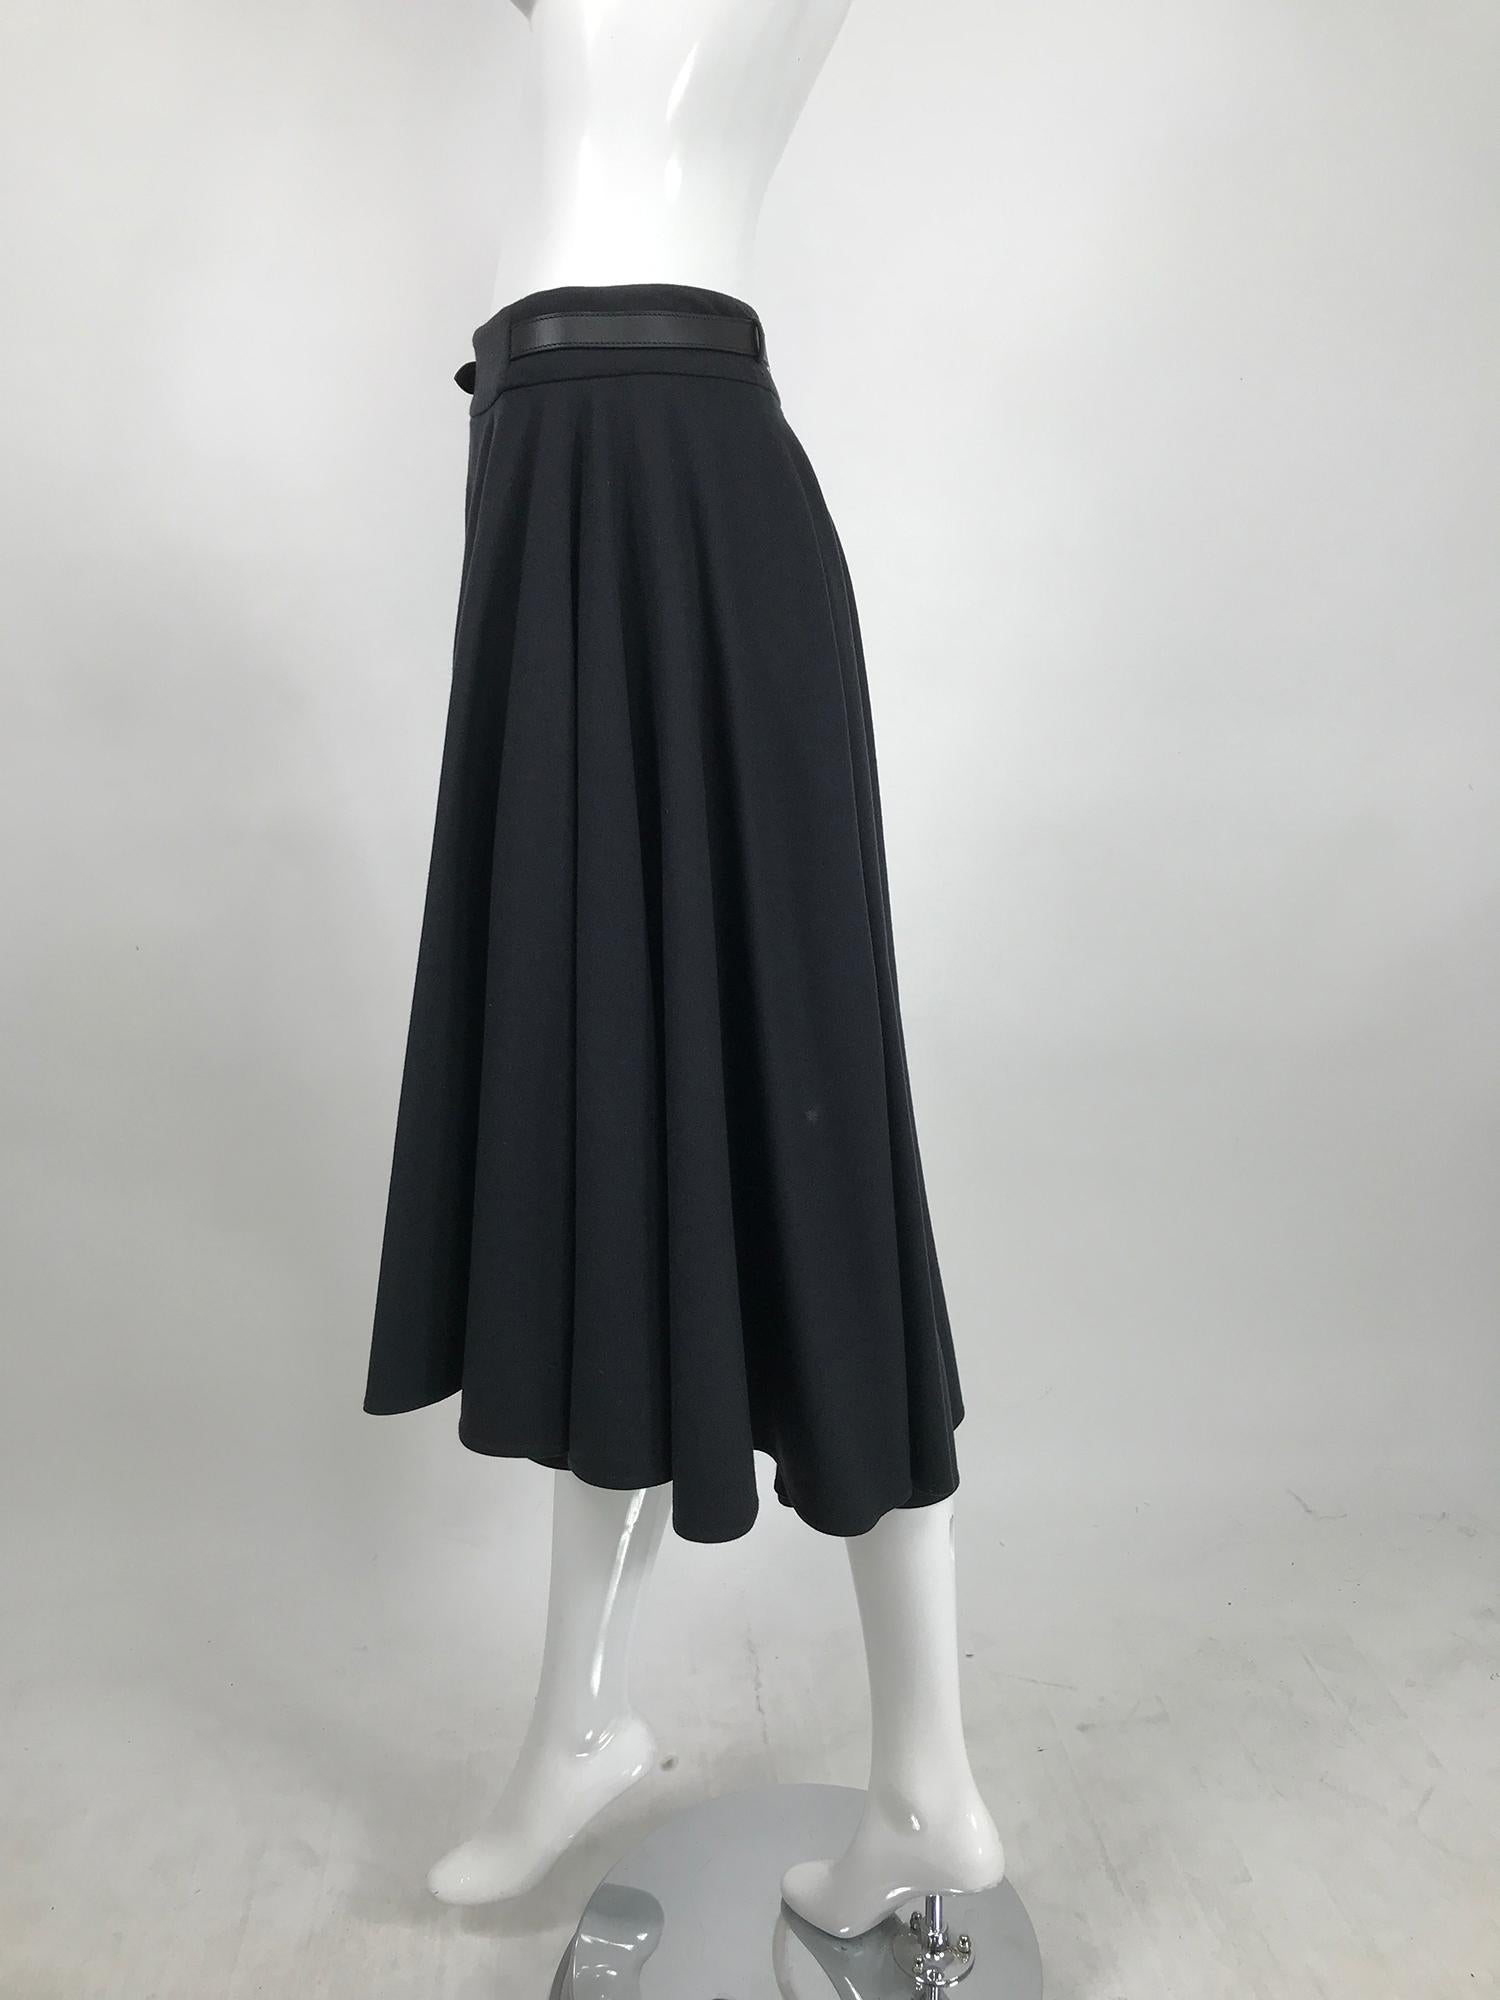 Hermès Asymmetrical Black Wool Full Circle Wrap Skirt with Leather Belt 2